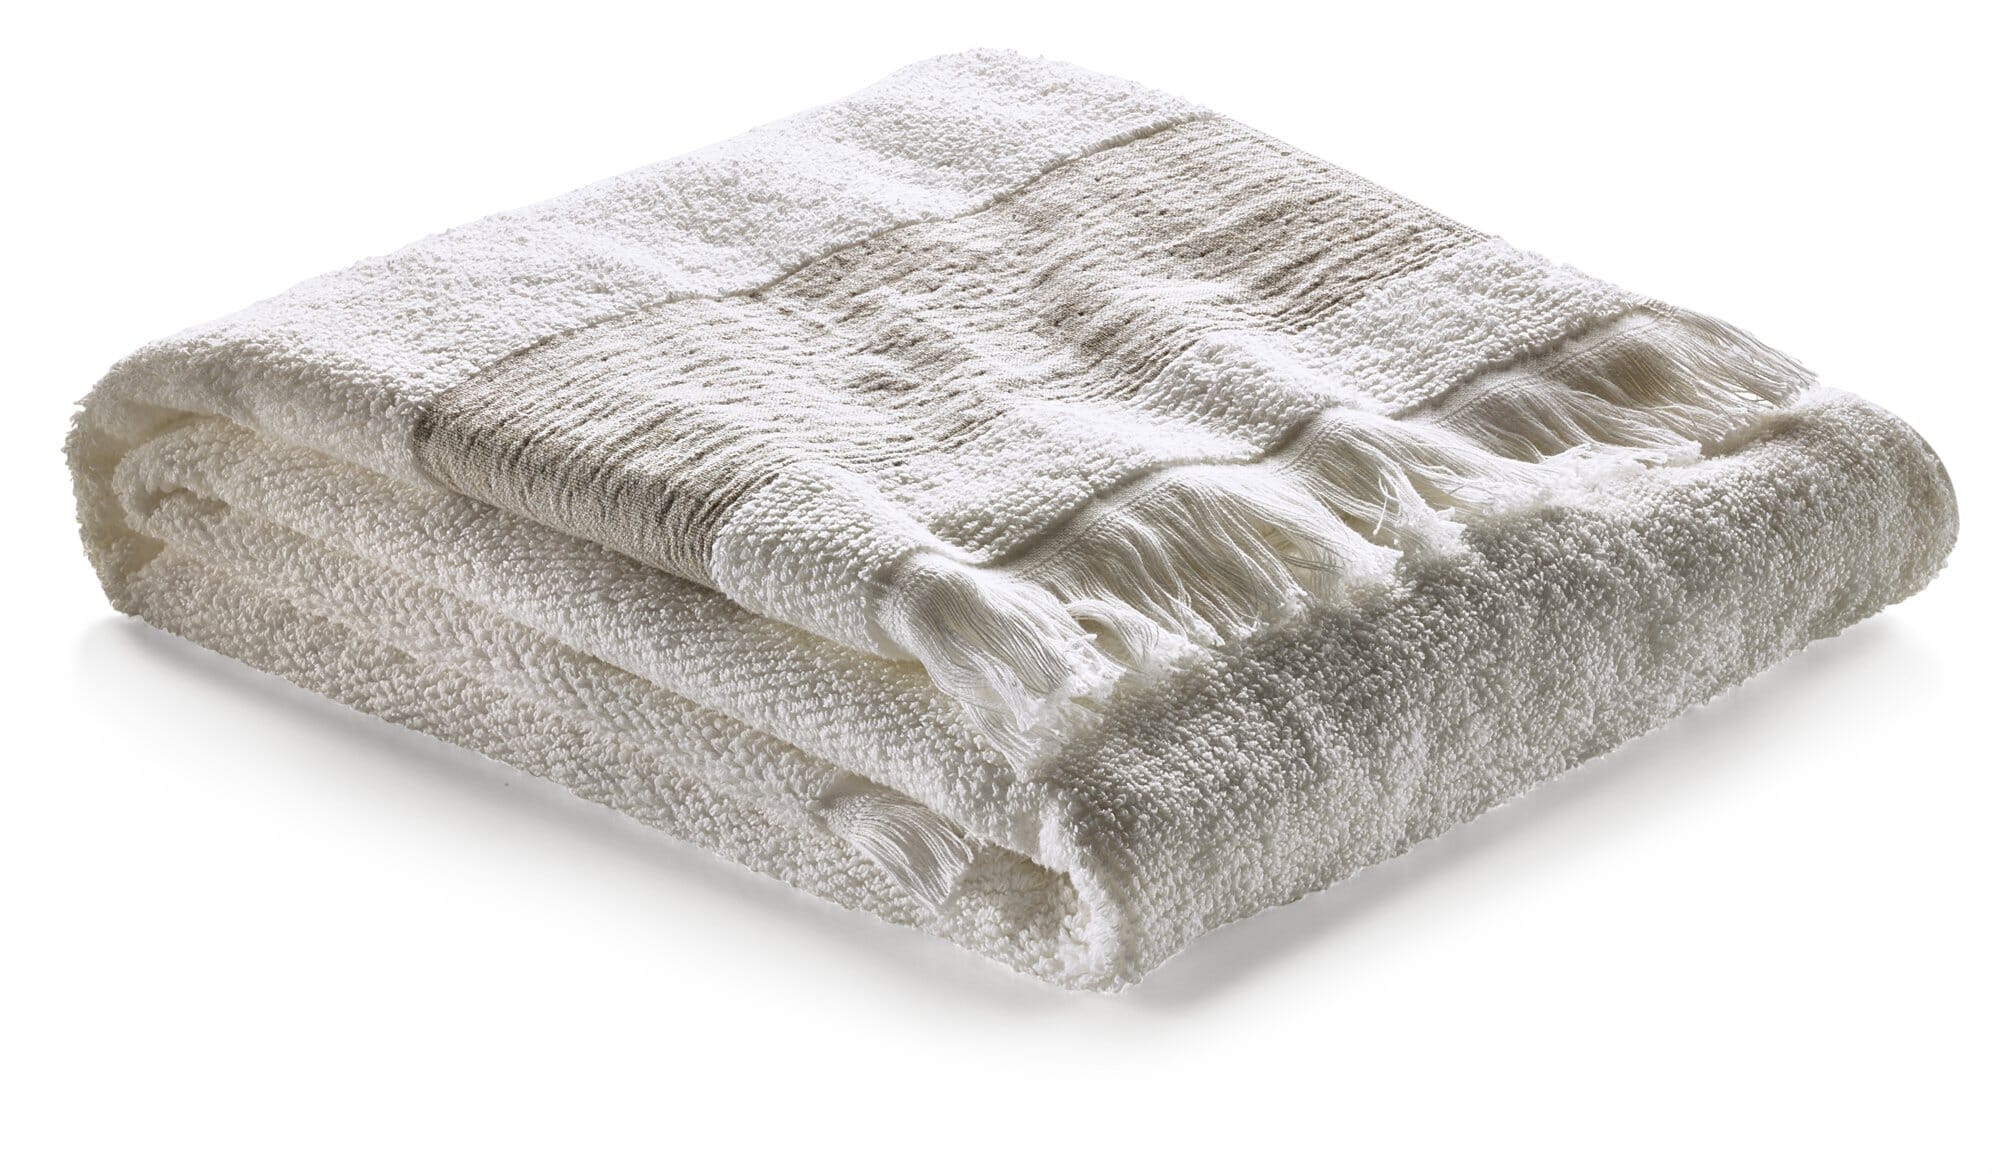 Shower towel linen border